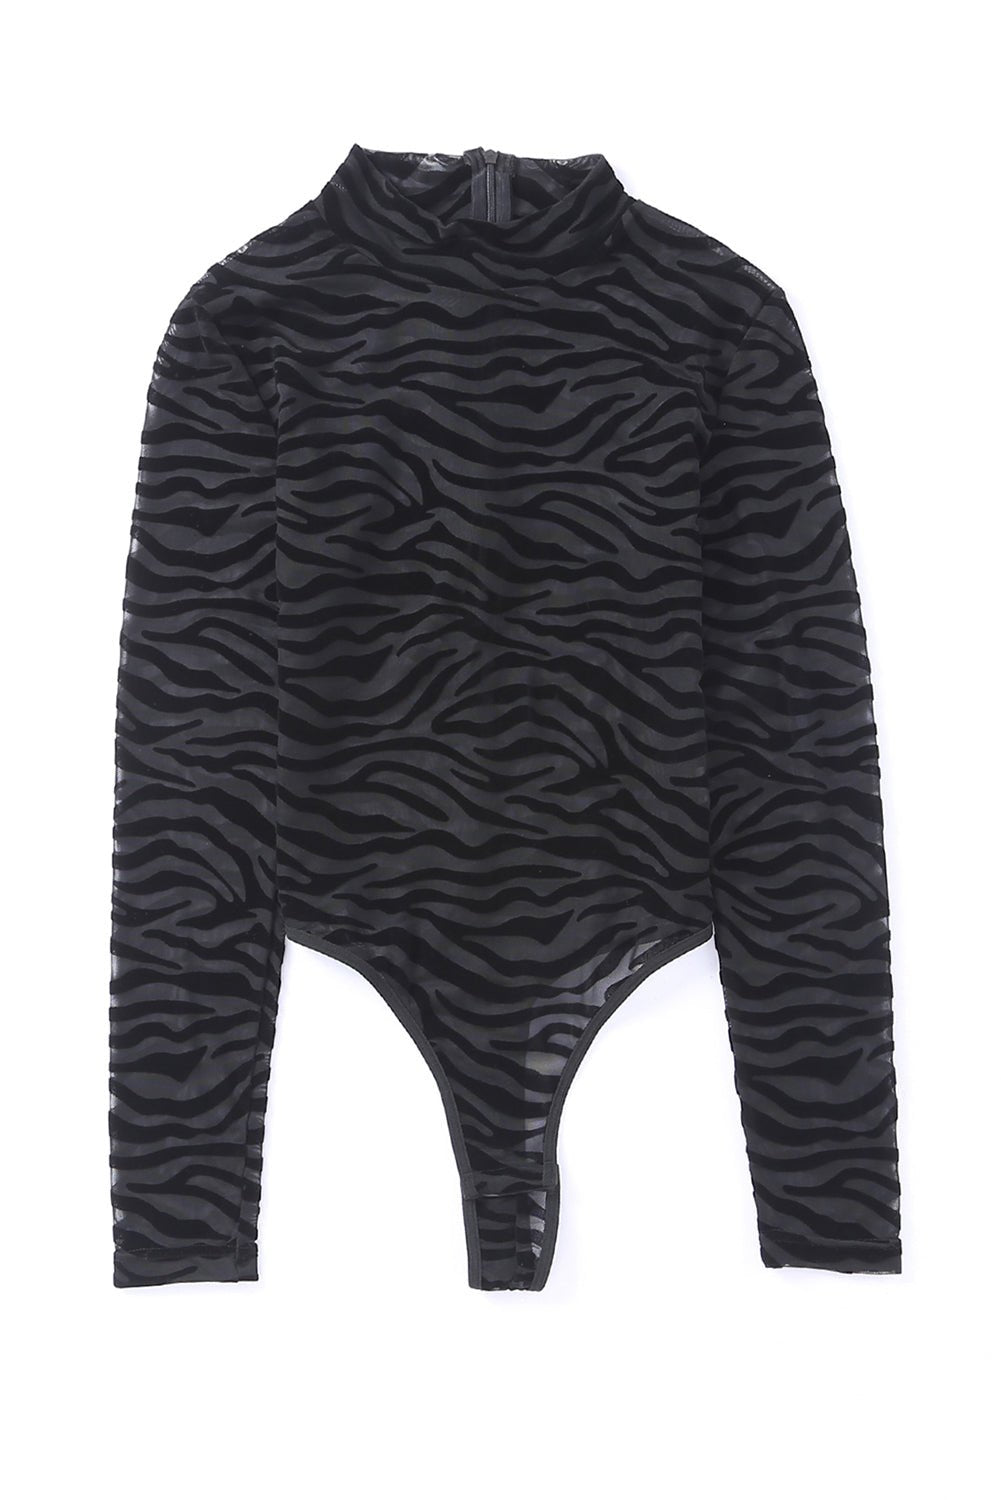 Fashionsarah.com Mock Neck Long Sleeve Zebra Bodysuits